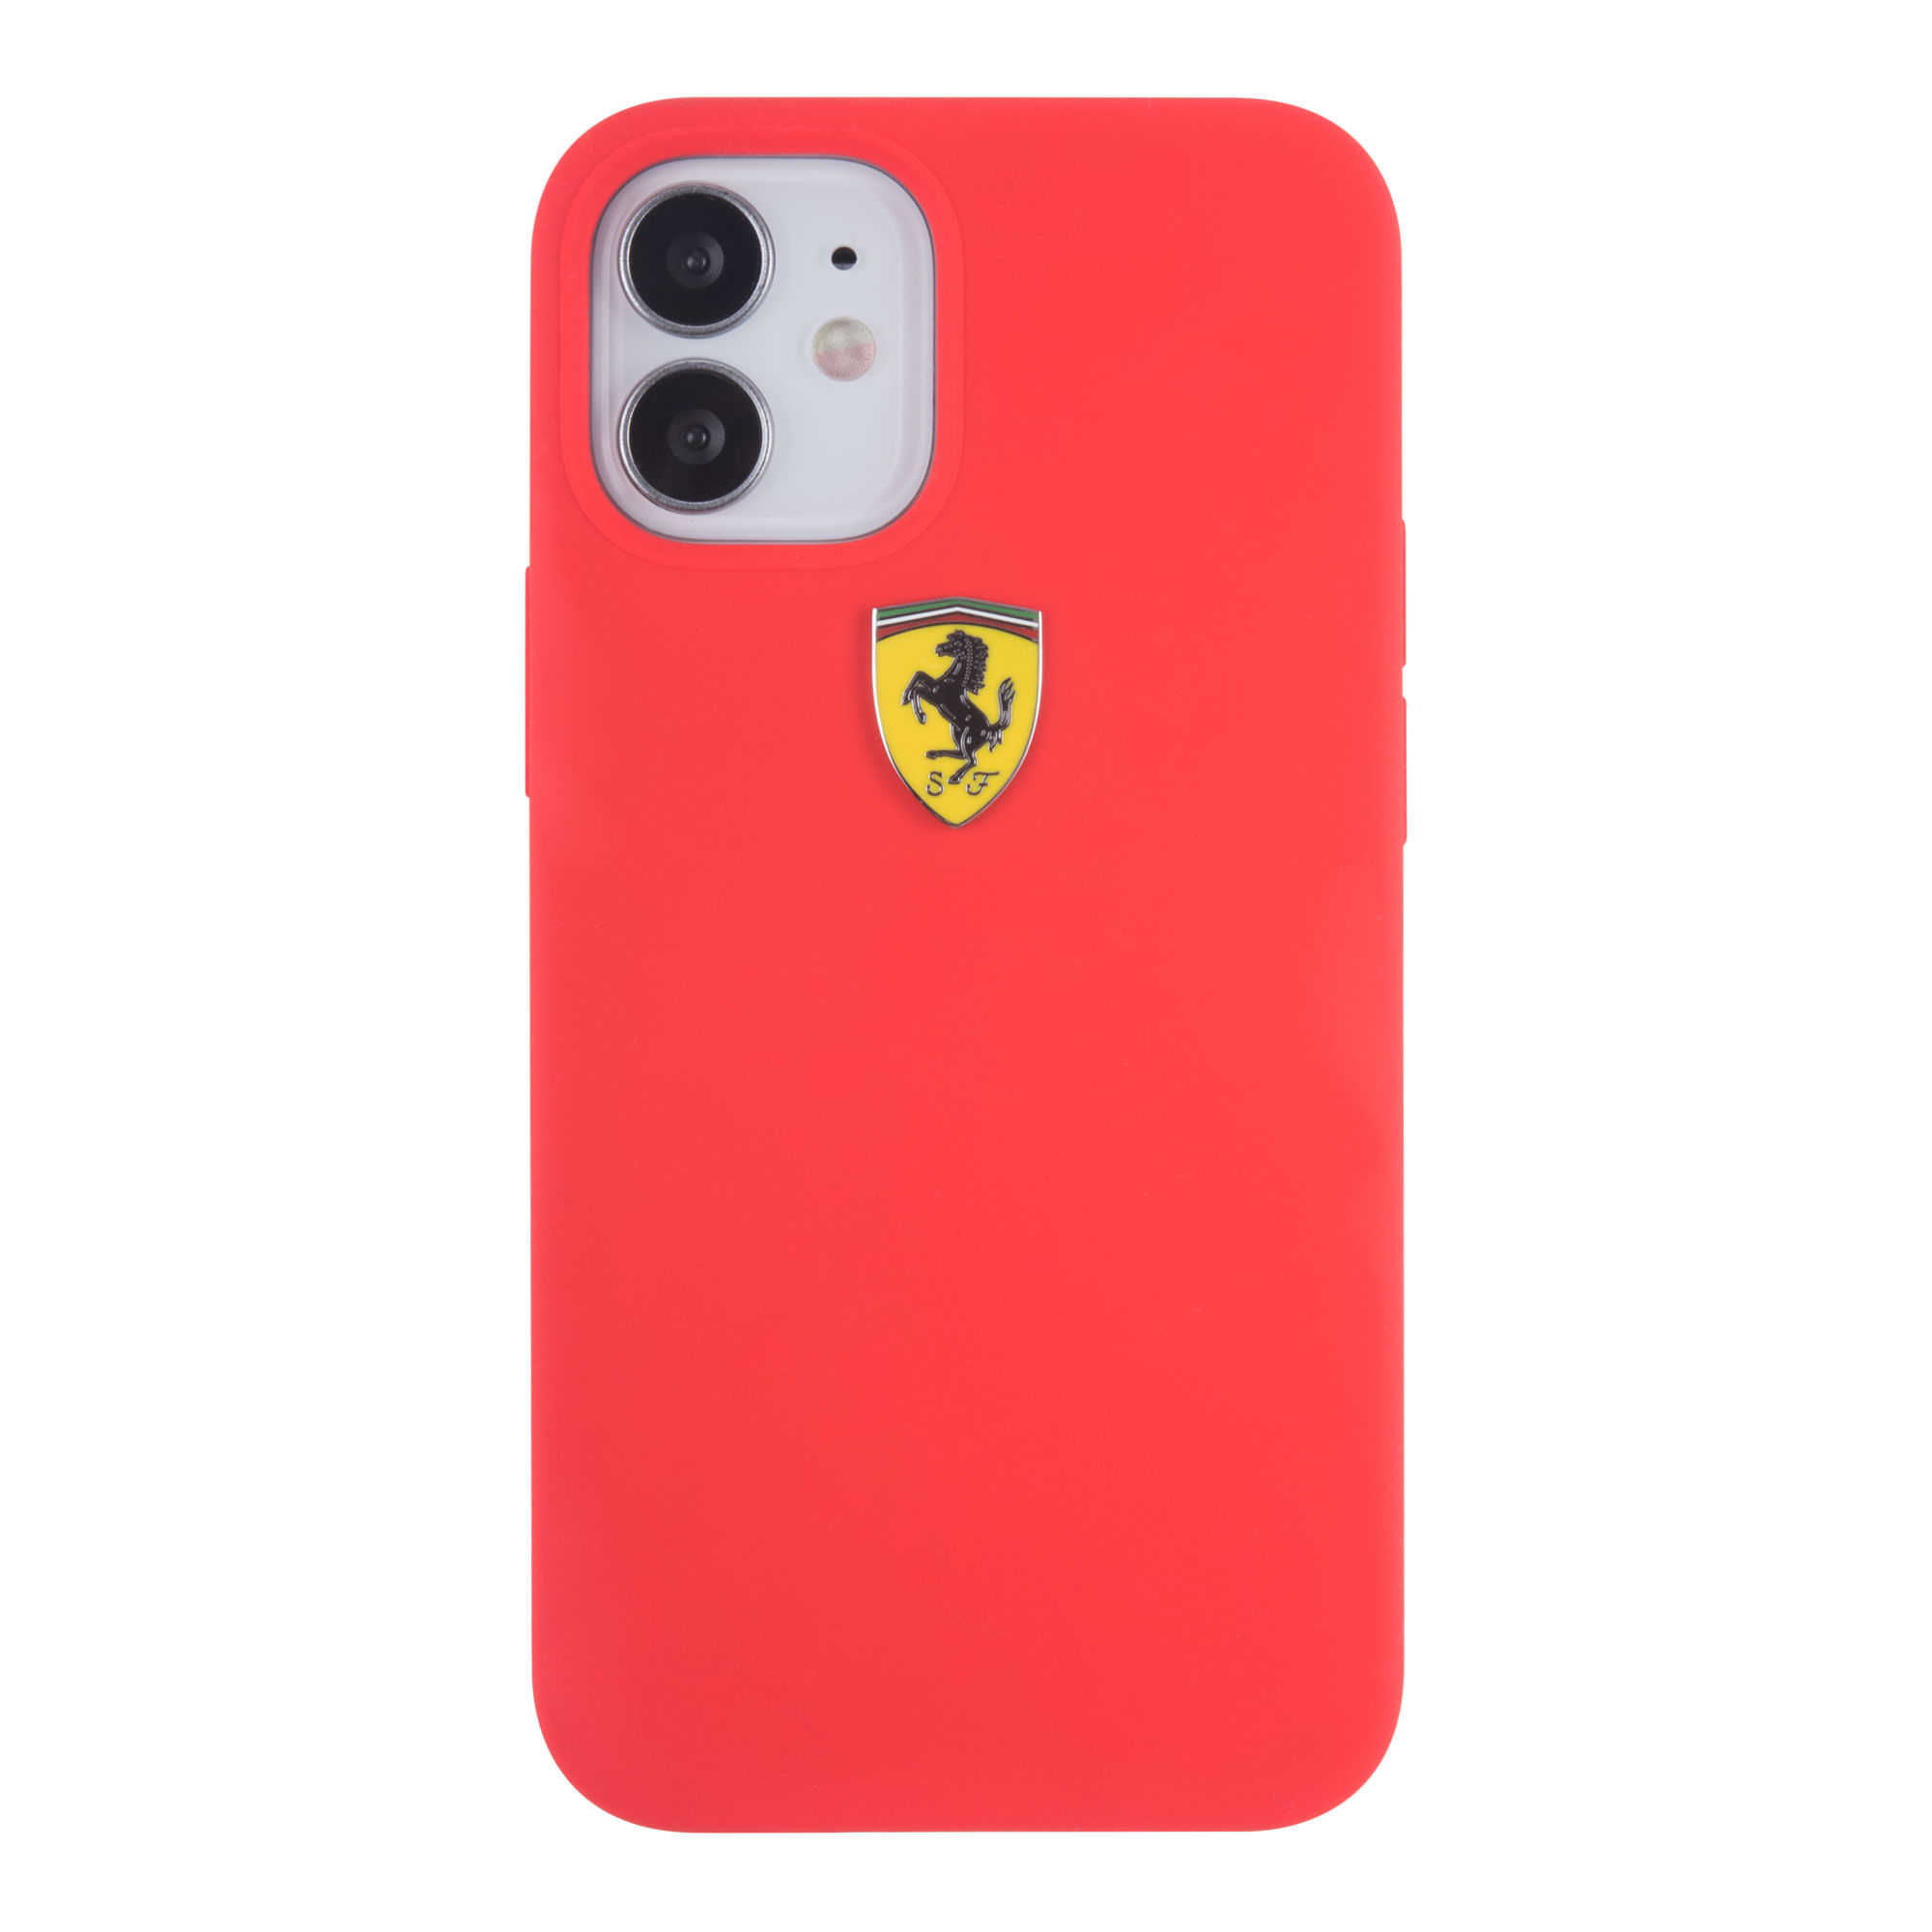 Case/Funda Ferrari de Piel Perforada Color Rojo iPhone 11 Pro Max